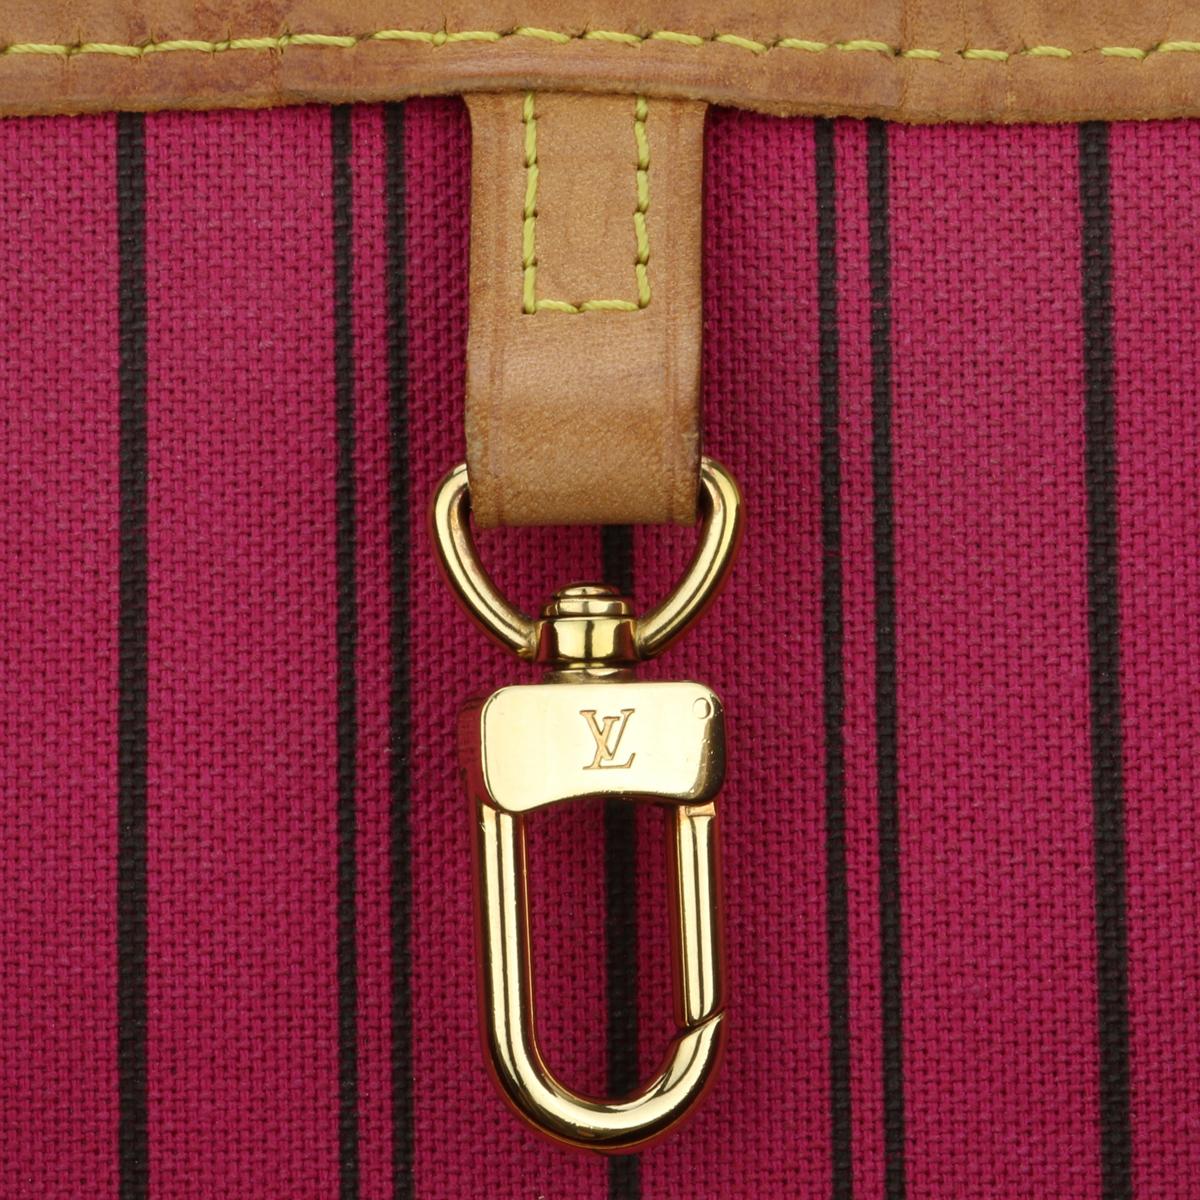 Louis Vuitton Neverfull MM Bag in Monogram with Pivoine Interior 2019 11